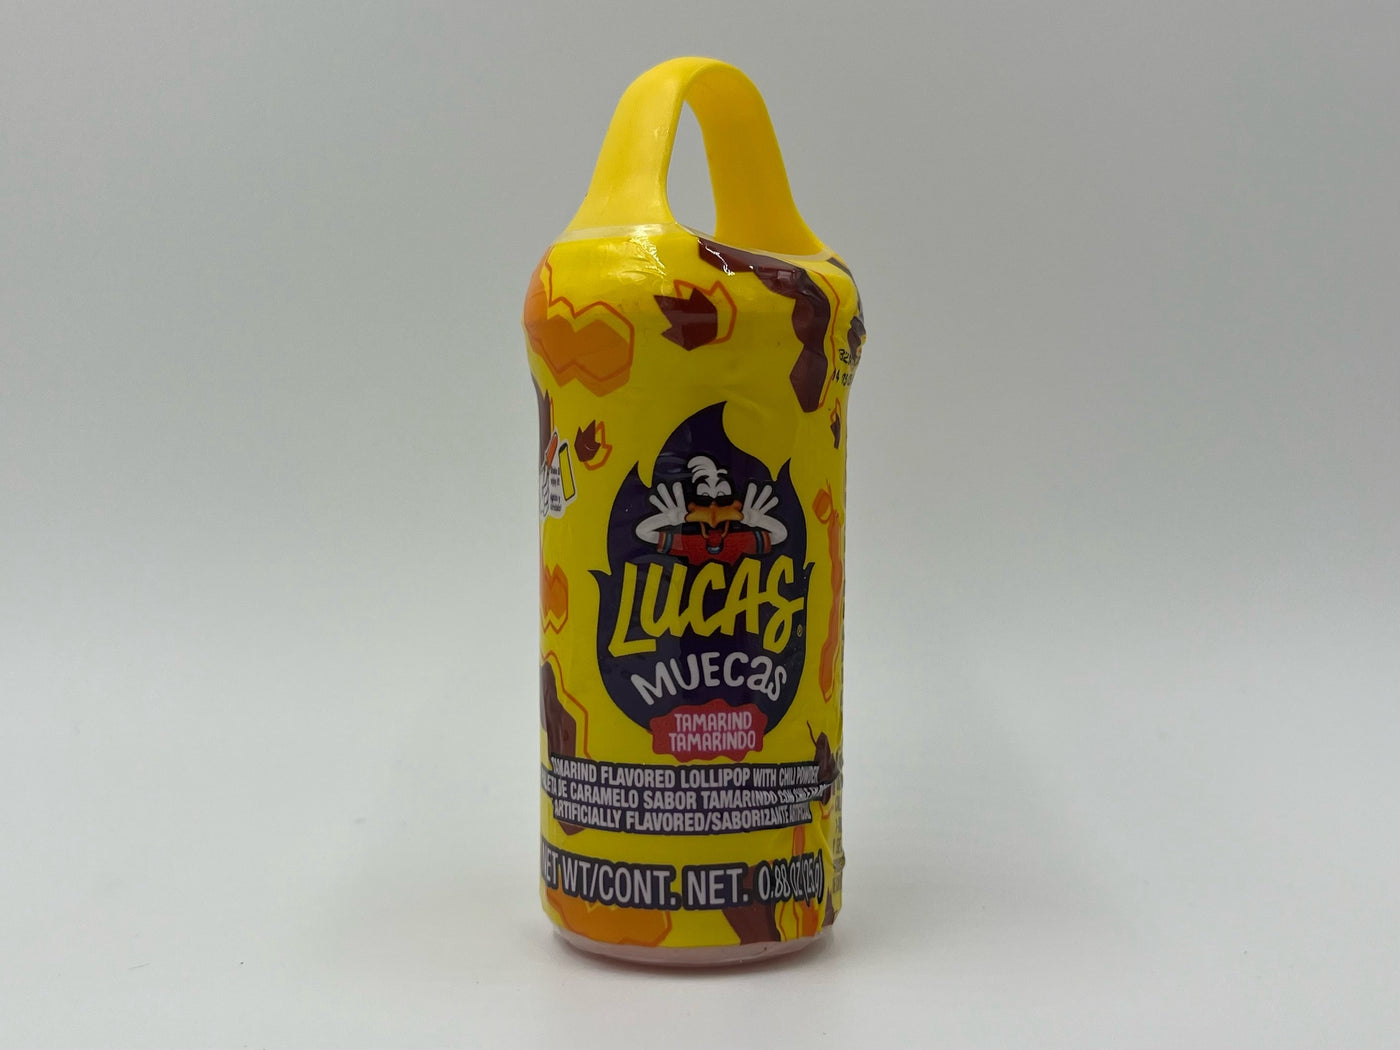 Lucas Muecas Lollipop Dipper Tamarind (Mexico)